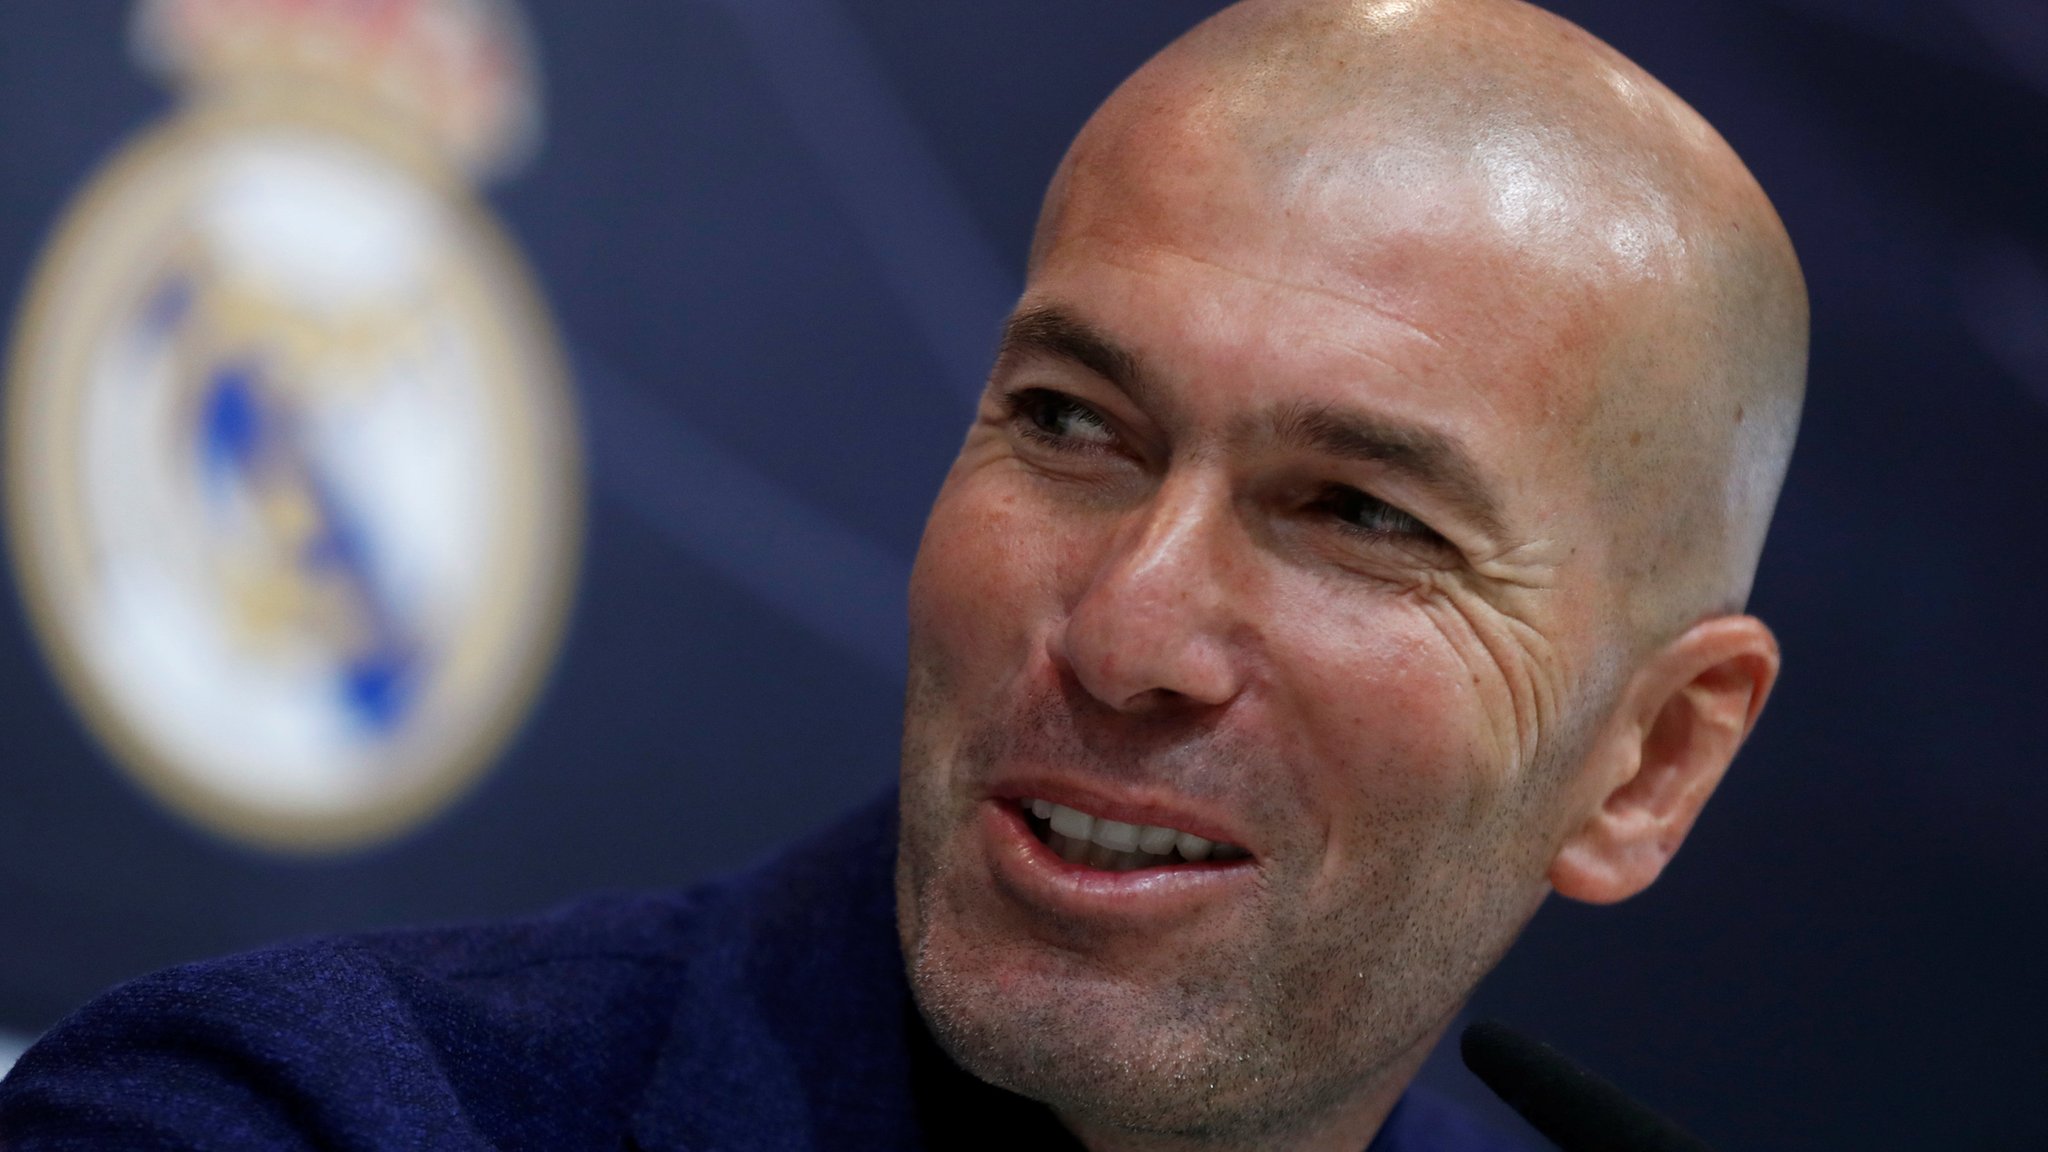 Gossip: Former Real boss Zidane taking English lessons